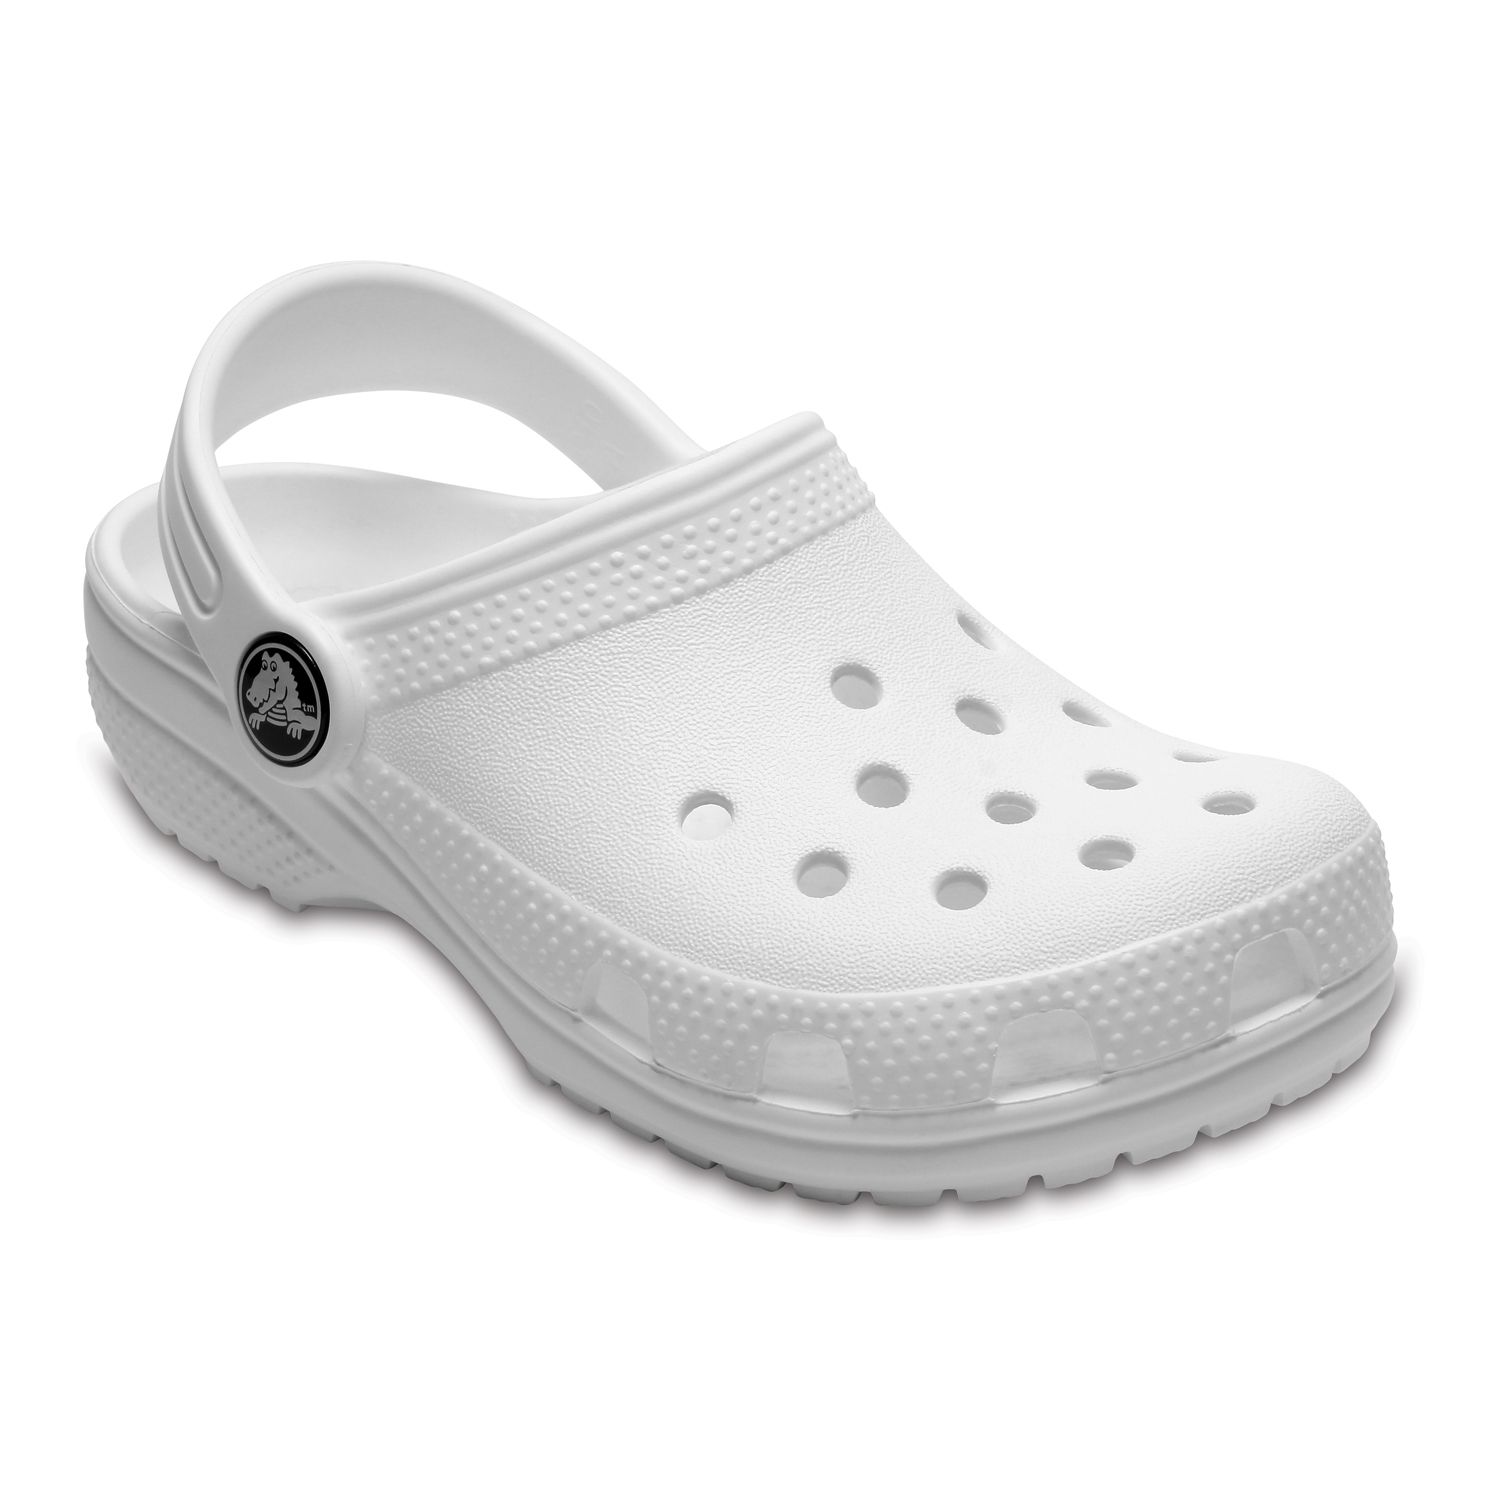 girls size 4 white crocs